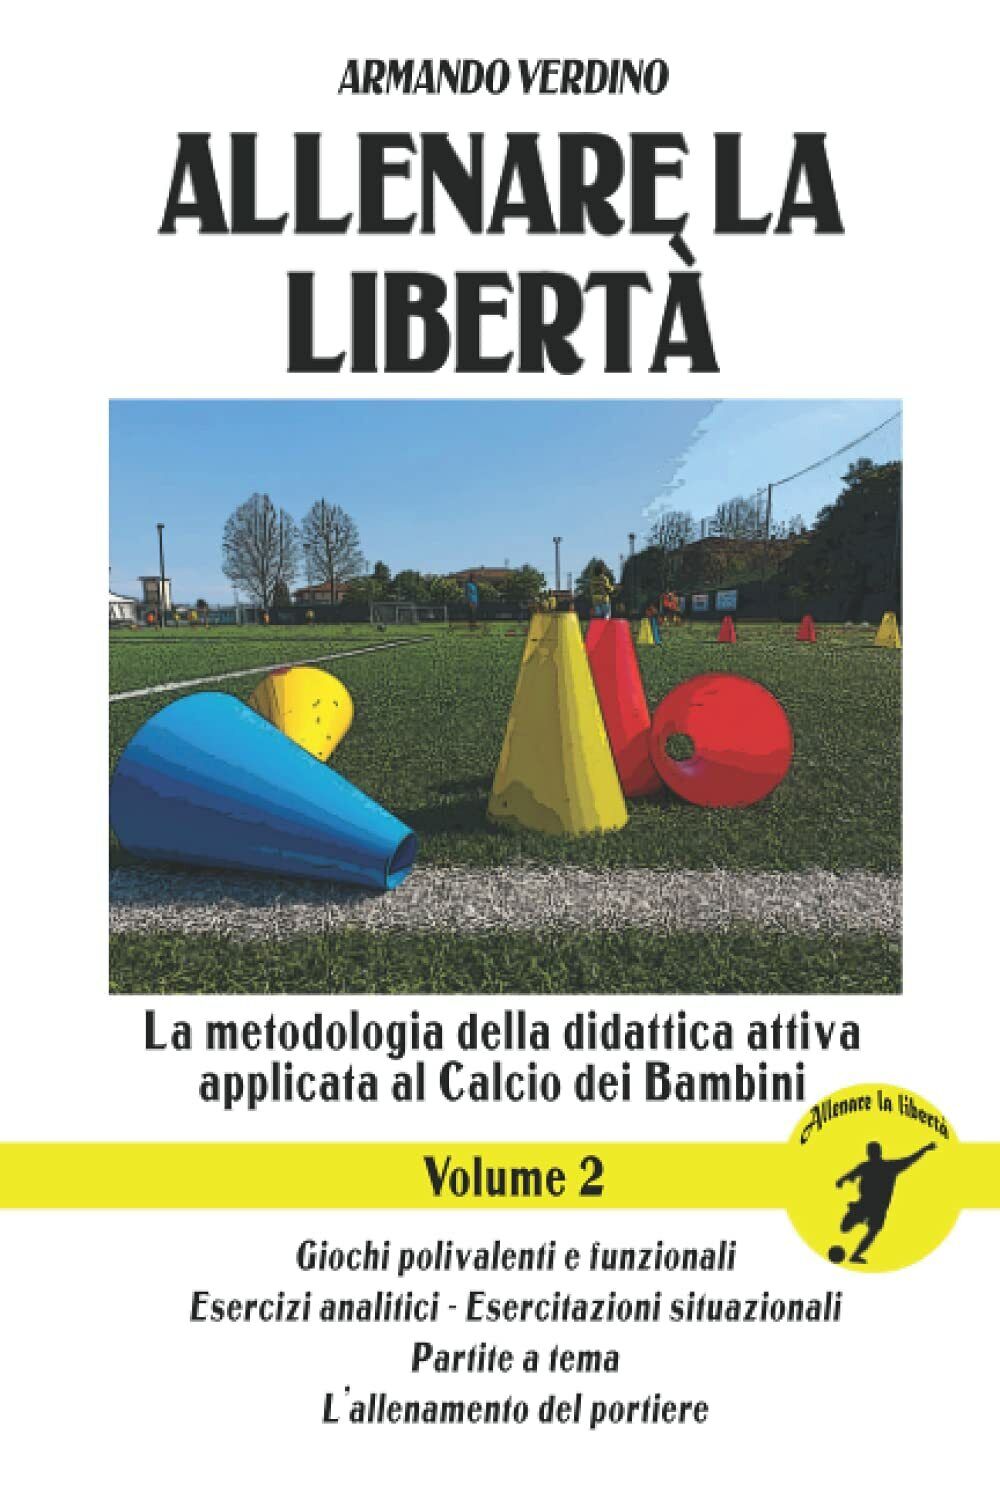 Allenare la libert? - Volume 2 - Armando Verdino - Independently Published,2021